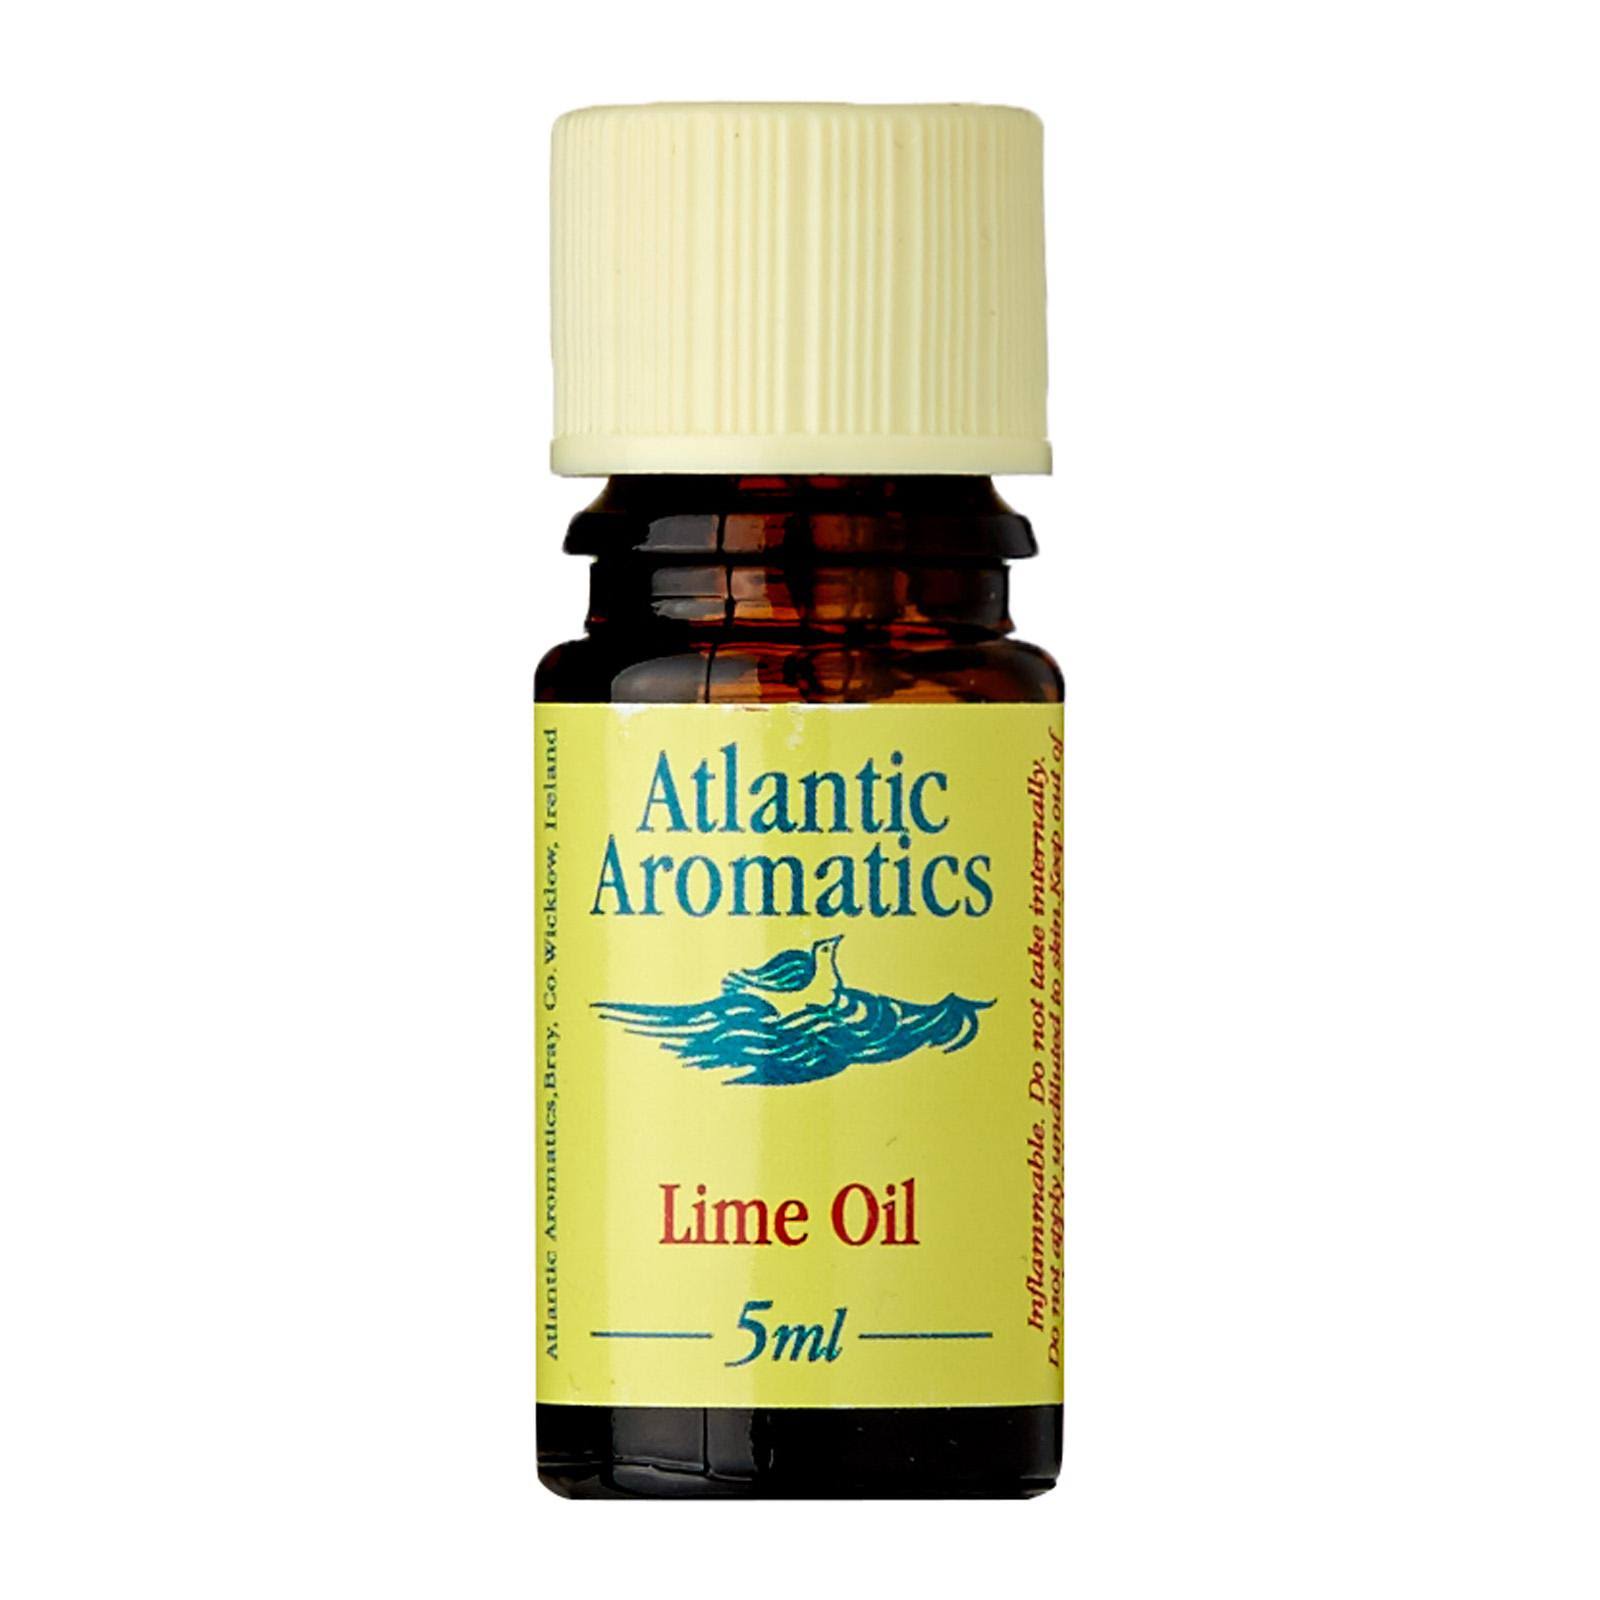 Atlantic Aromatics Lime Oil - 5ml